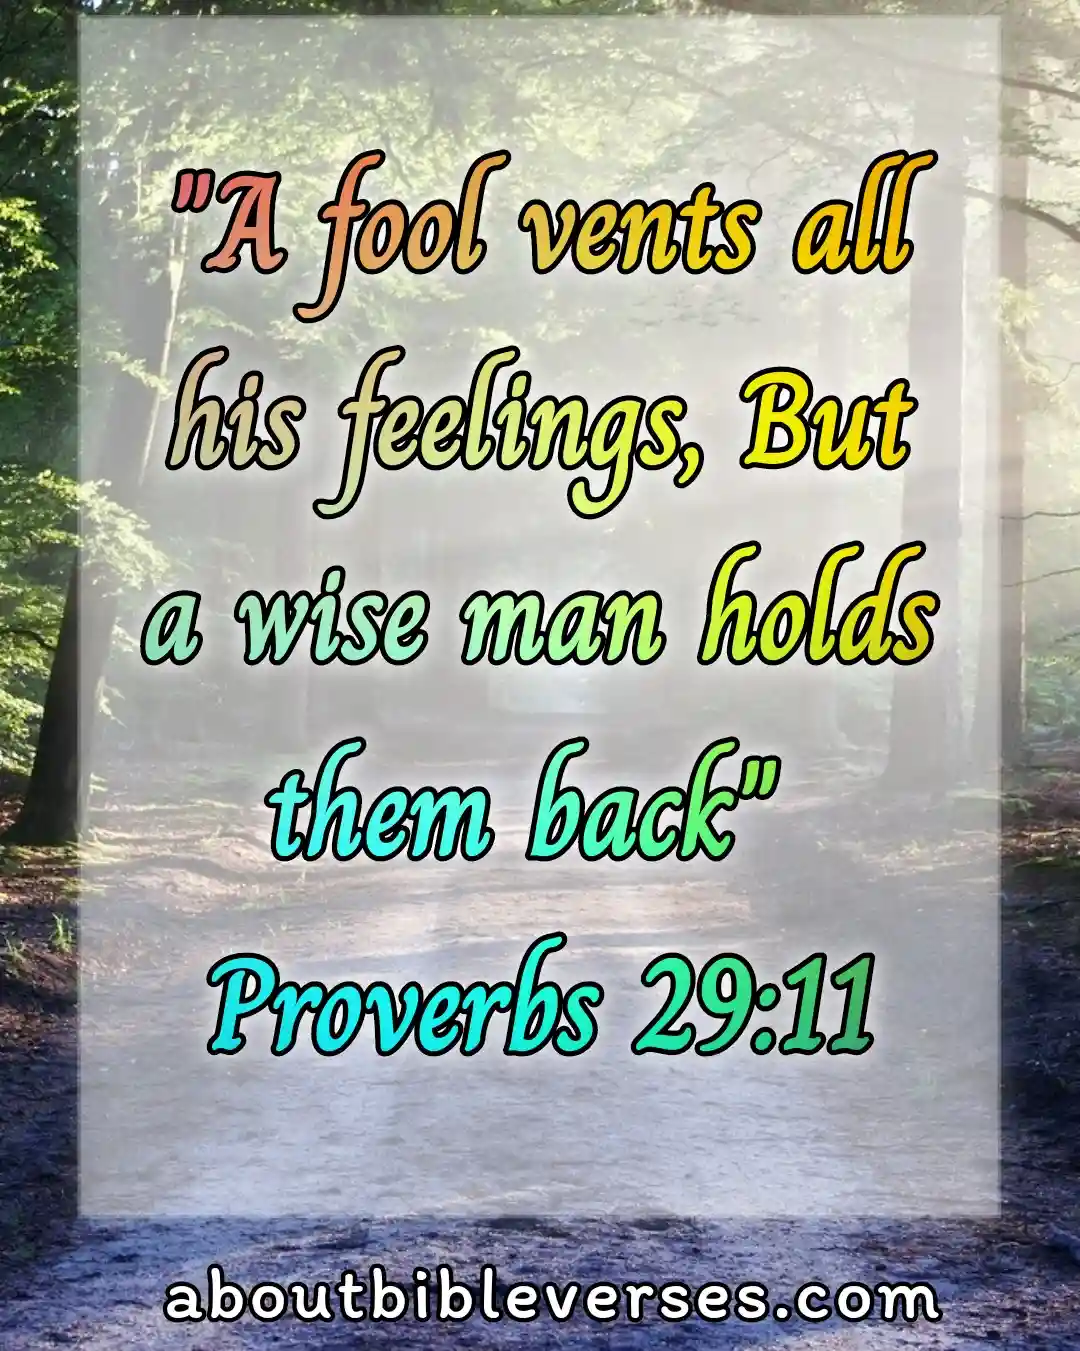 today bible verse (Proverbs 29:11)